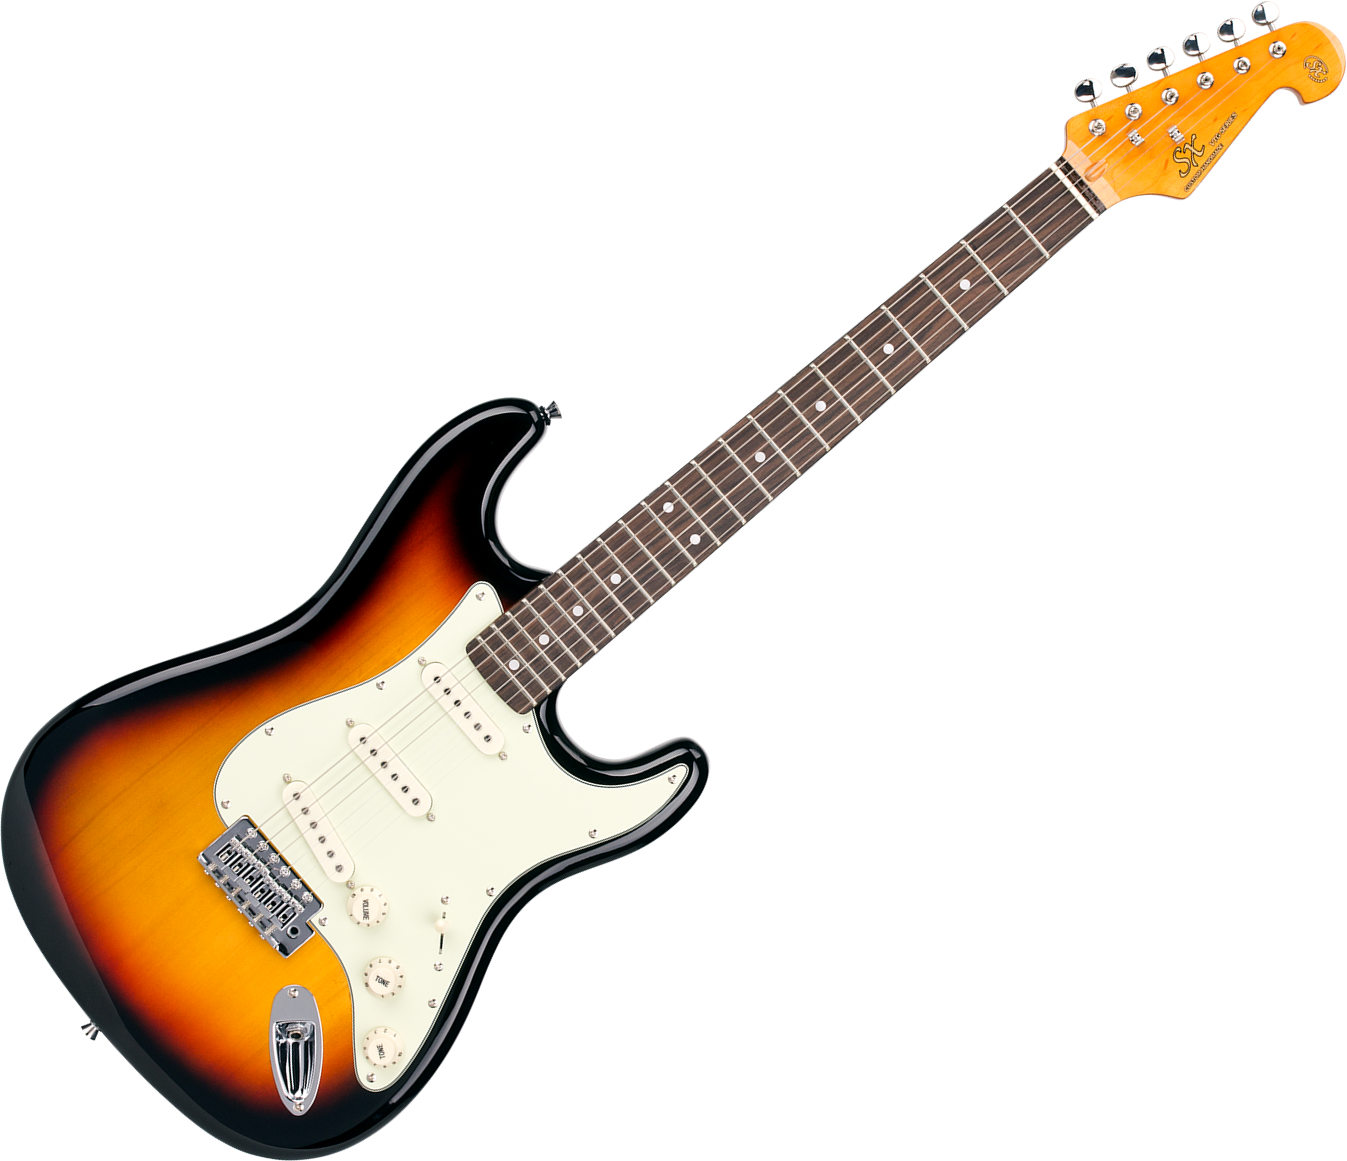 Помоги маше купить гитару. Гитара STG-003 3ts Aria. Электрогитара Bosstone sg03. Электрогитара Aria STG-003 3ts внутри. SX sst62+/3ts.